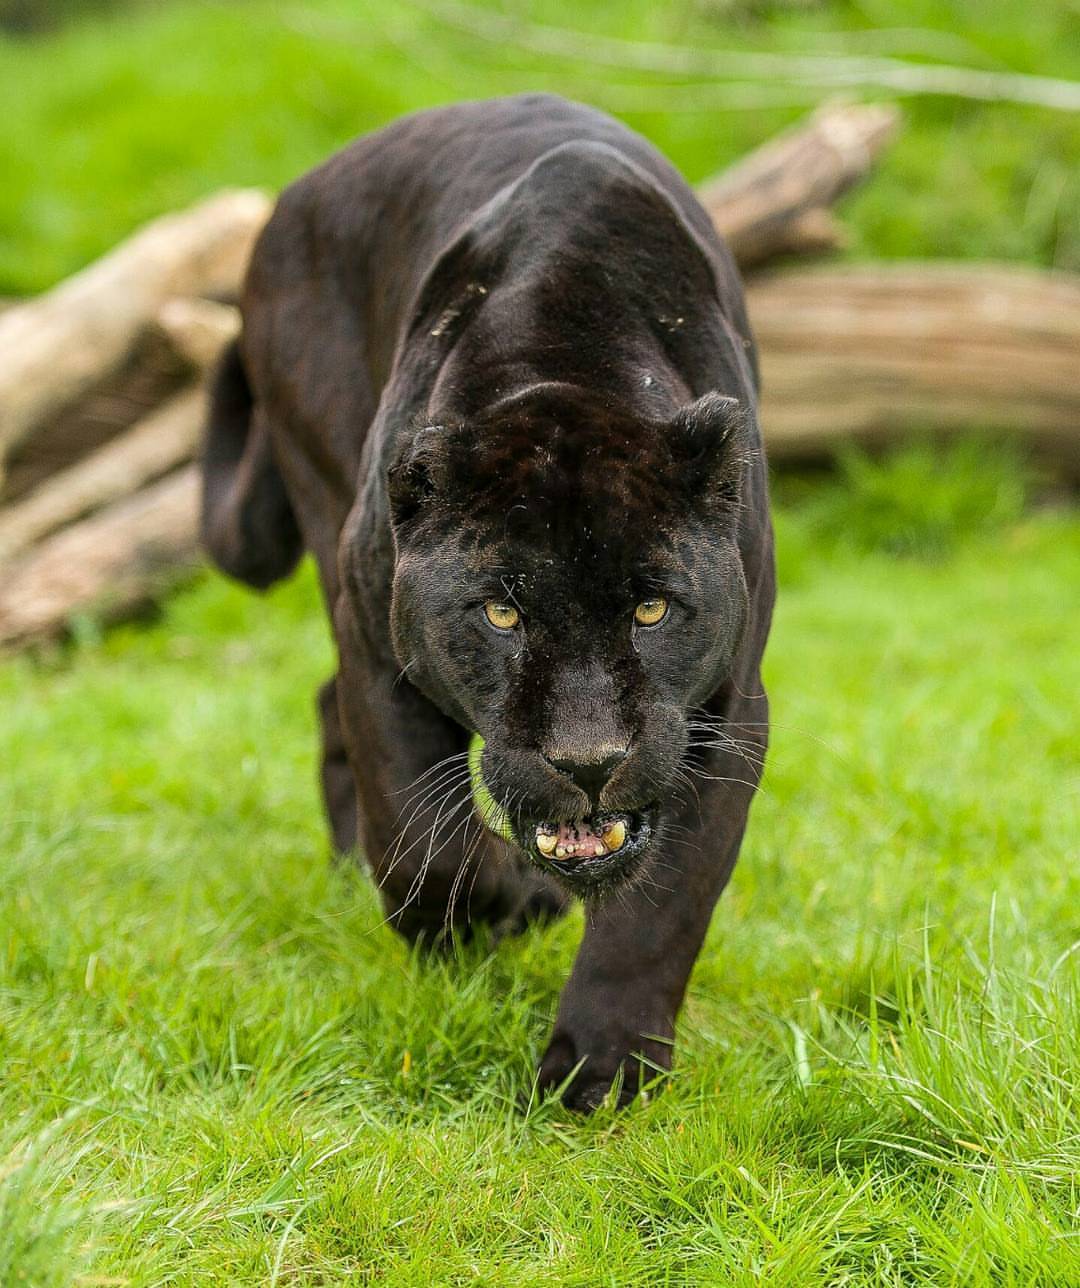 geographicwild:
“.
Black Jaguar.
Photography by © (Colin Langford).
Taken at the WHF in Kent. #wildlife #jaguarblack jaguar #WHF #Kent
”